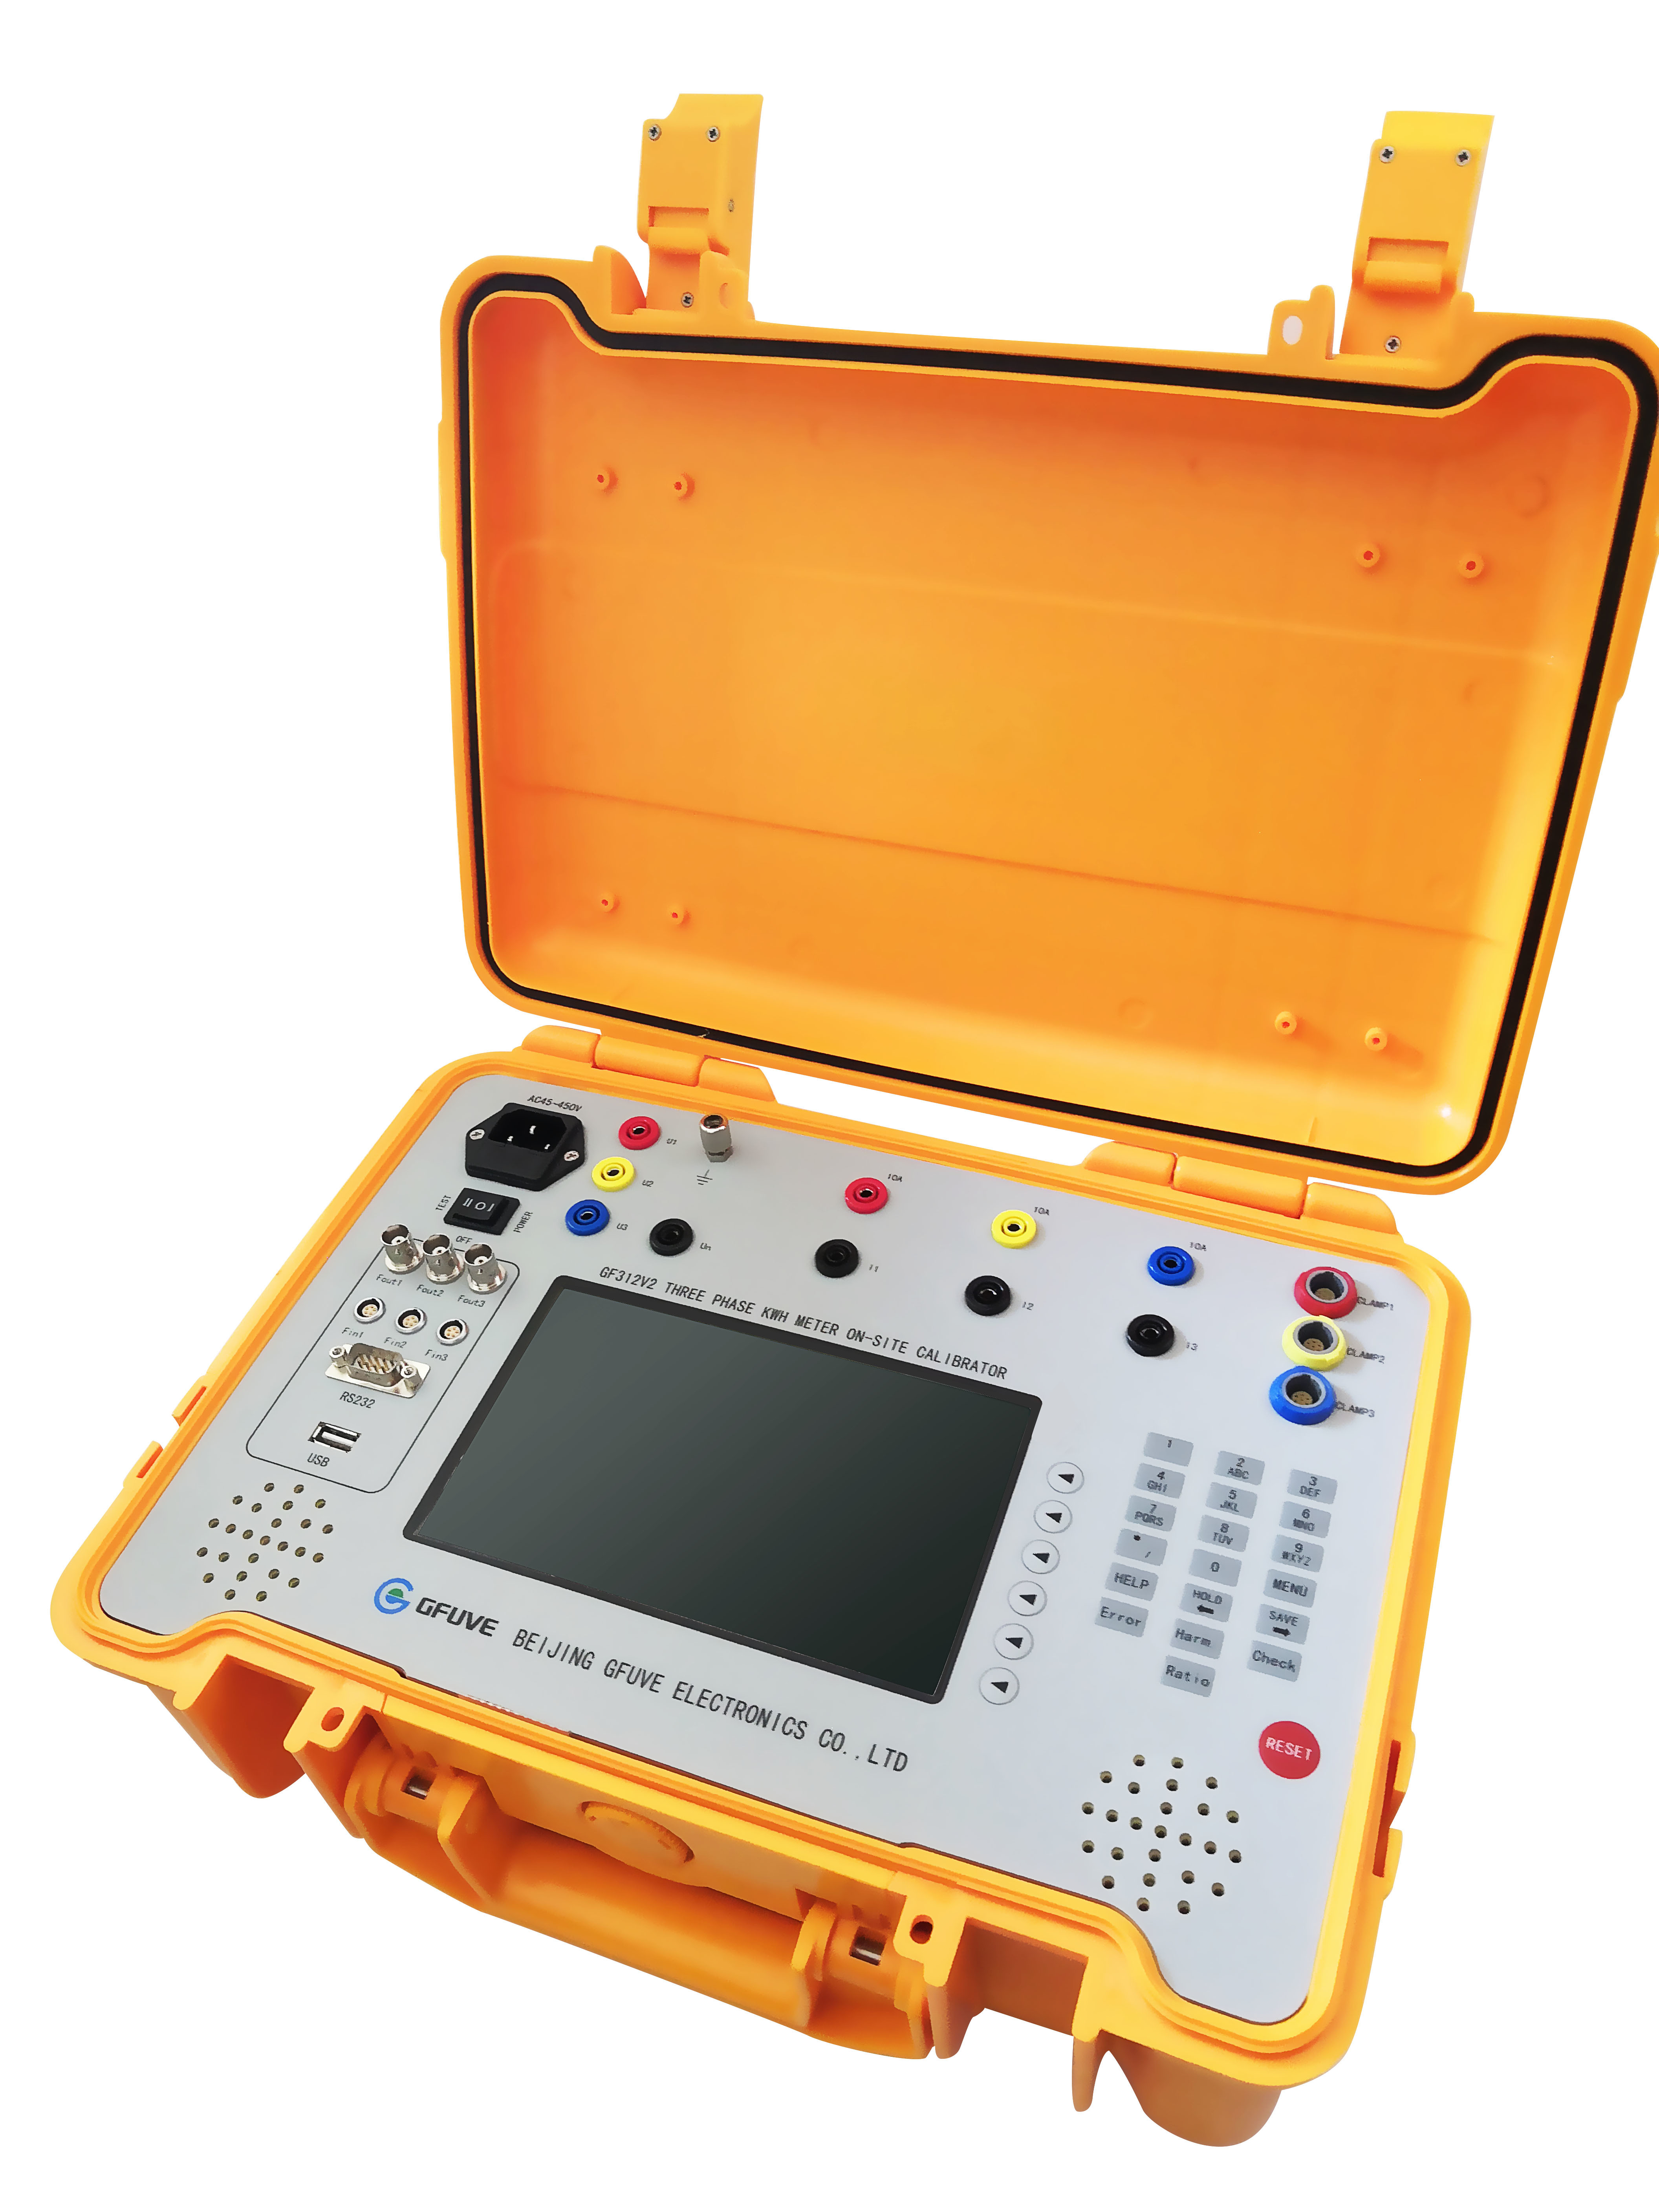 Energy Error Portable Meter Test Equipment Of 0.02% Three Phase Energy Meter Test Set